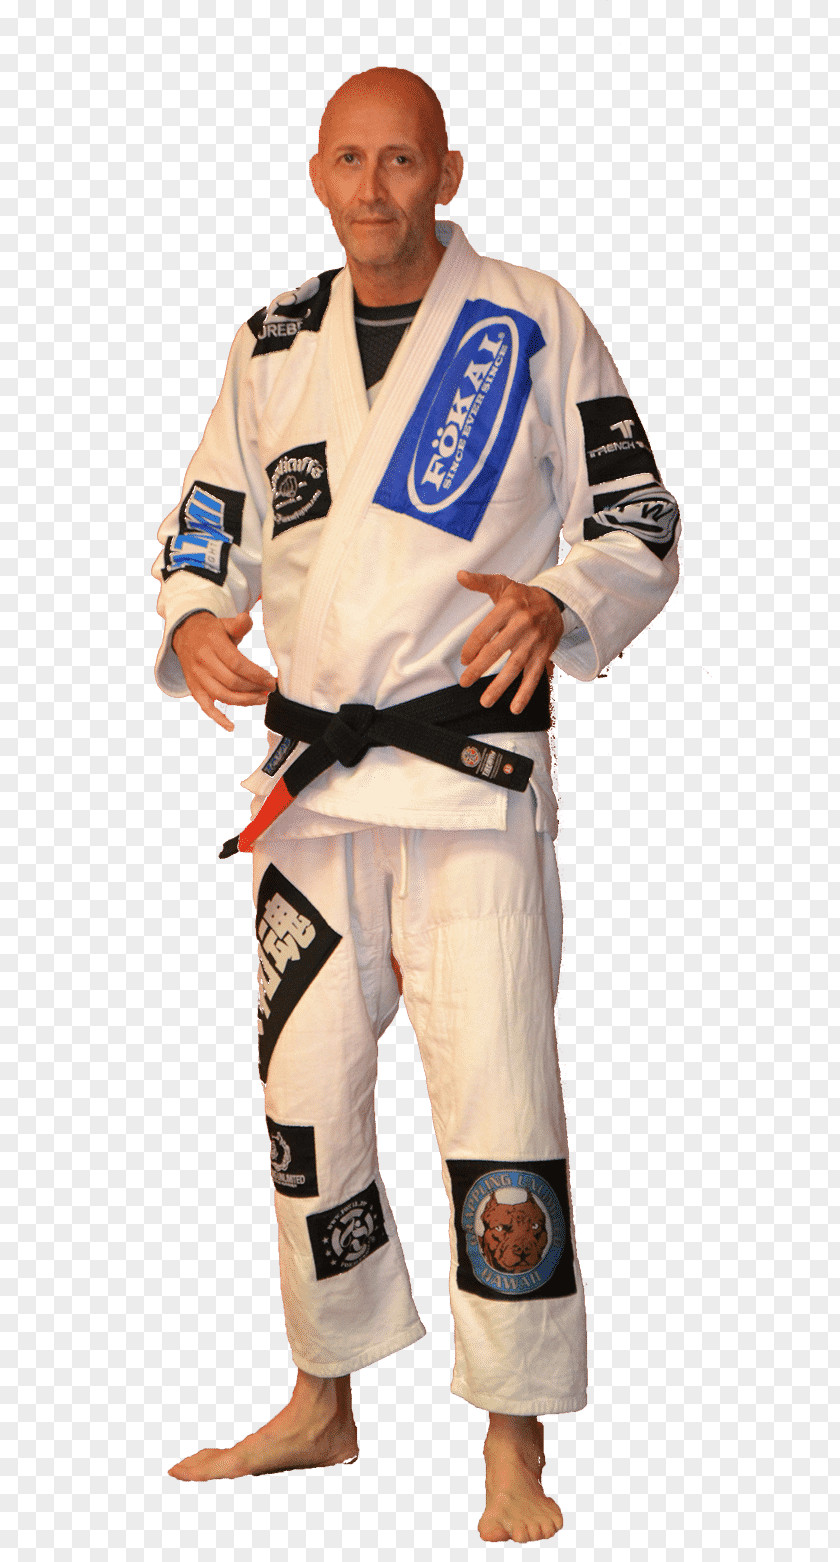 Chris Higgins Roger Gracie Dobok Brazilian Jiu-jitsu Jujutsu Martial Arts PNG